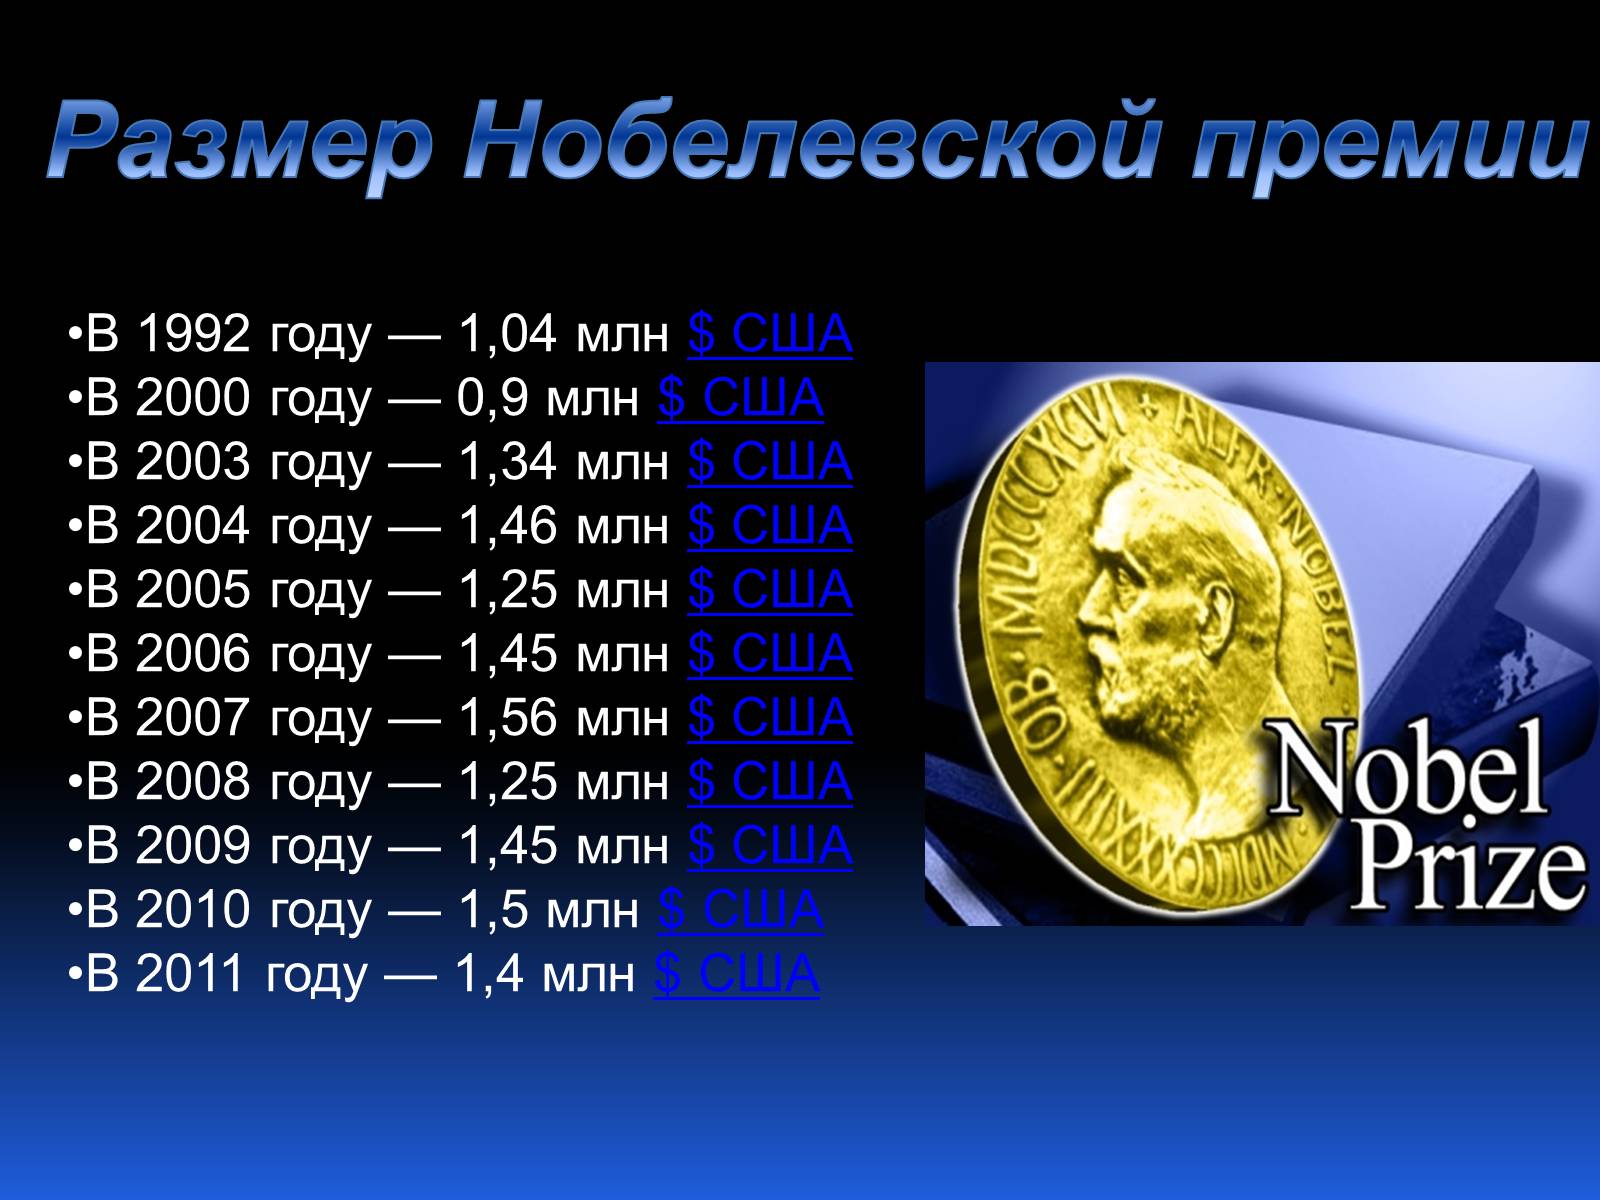 Презентація на тему «Альфред Нобель. Нобелевская премия» - Слайд #8